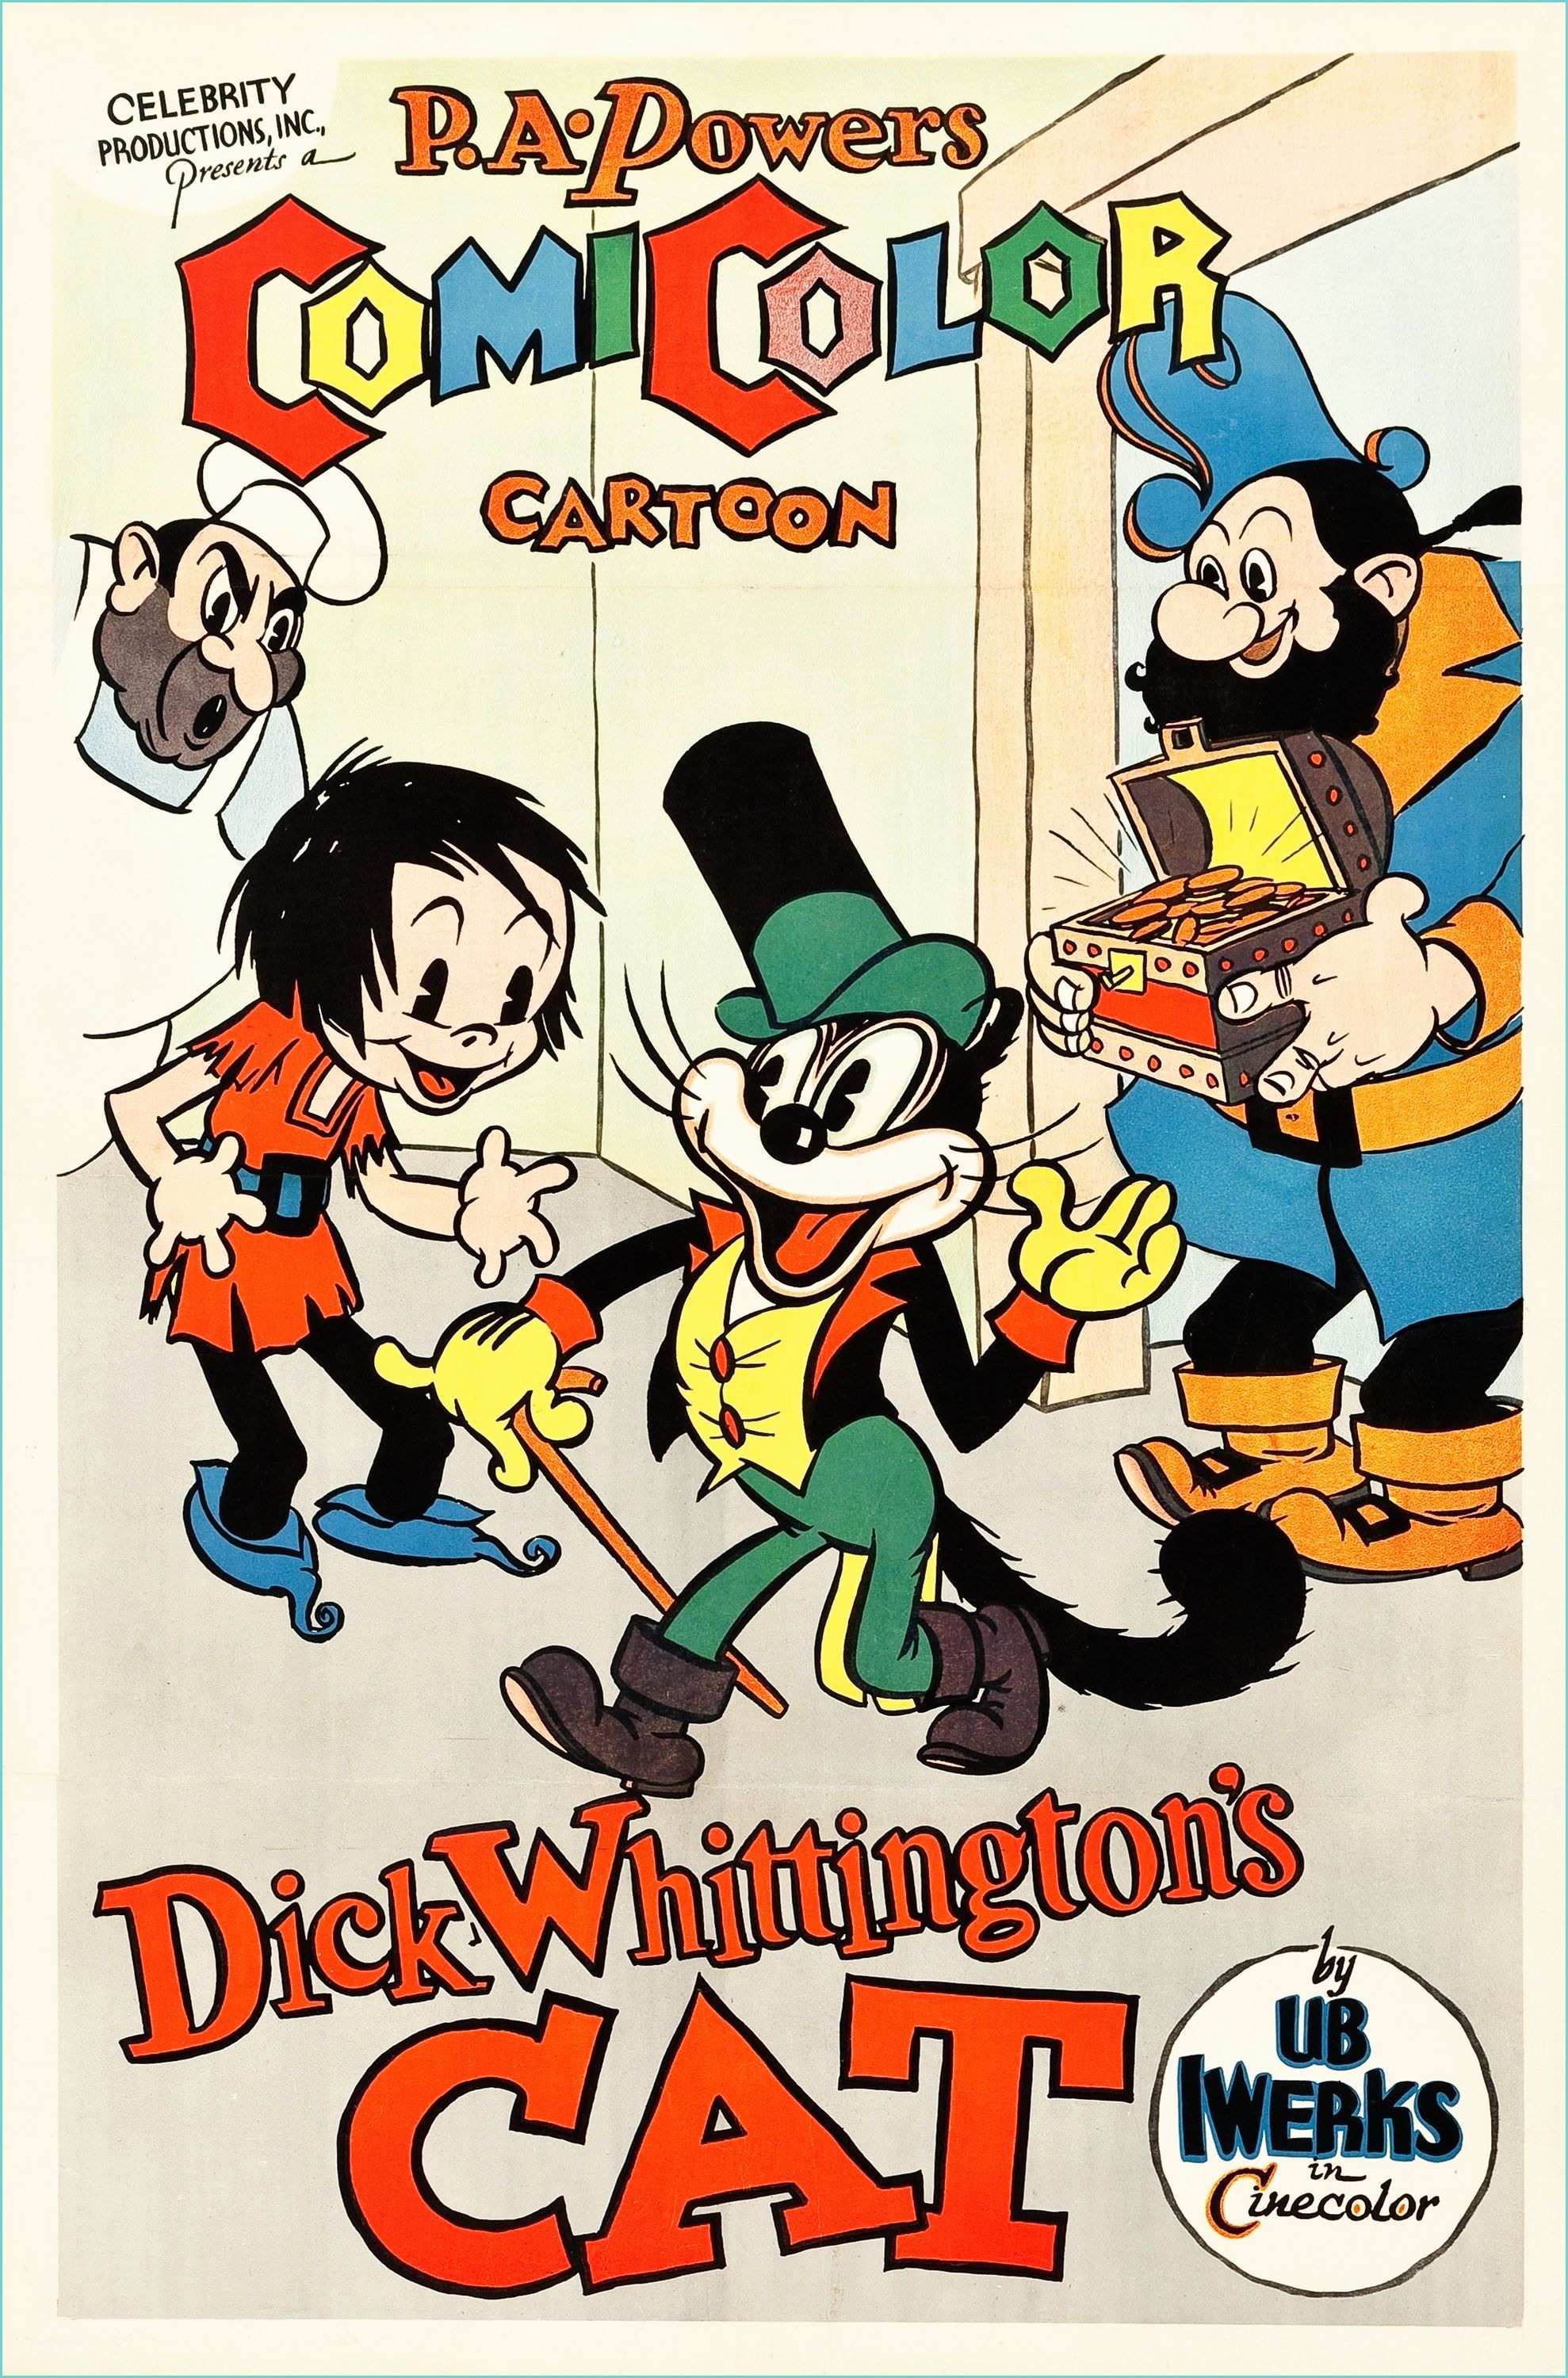 Allposters Return Policy 1936 Dick Whittington S Cat Ub Iwerks Cine Pinterest